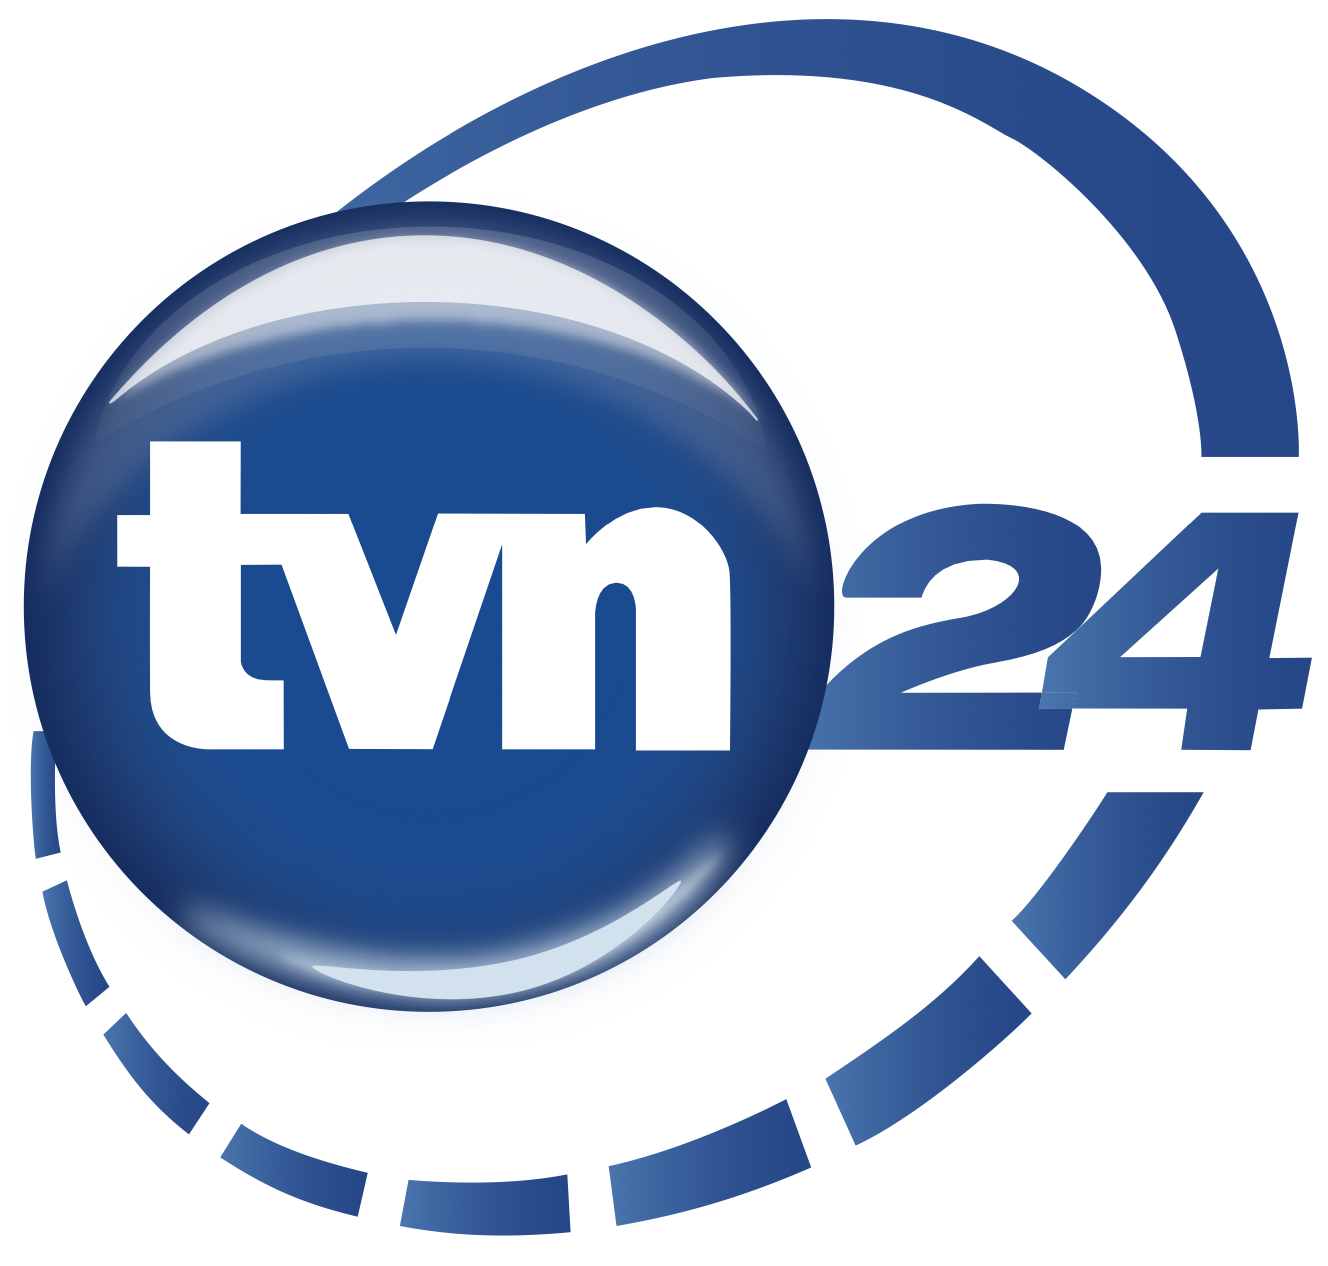 TVN24